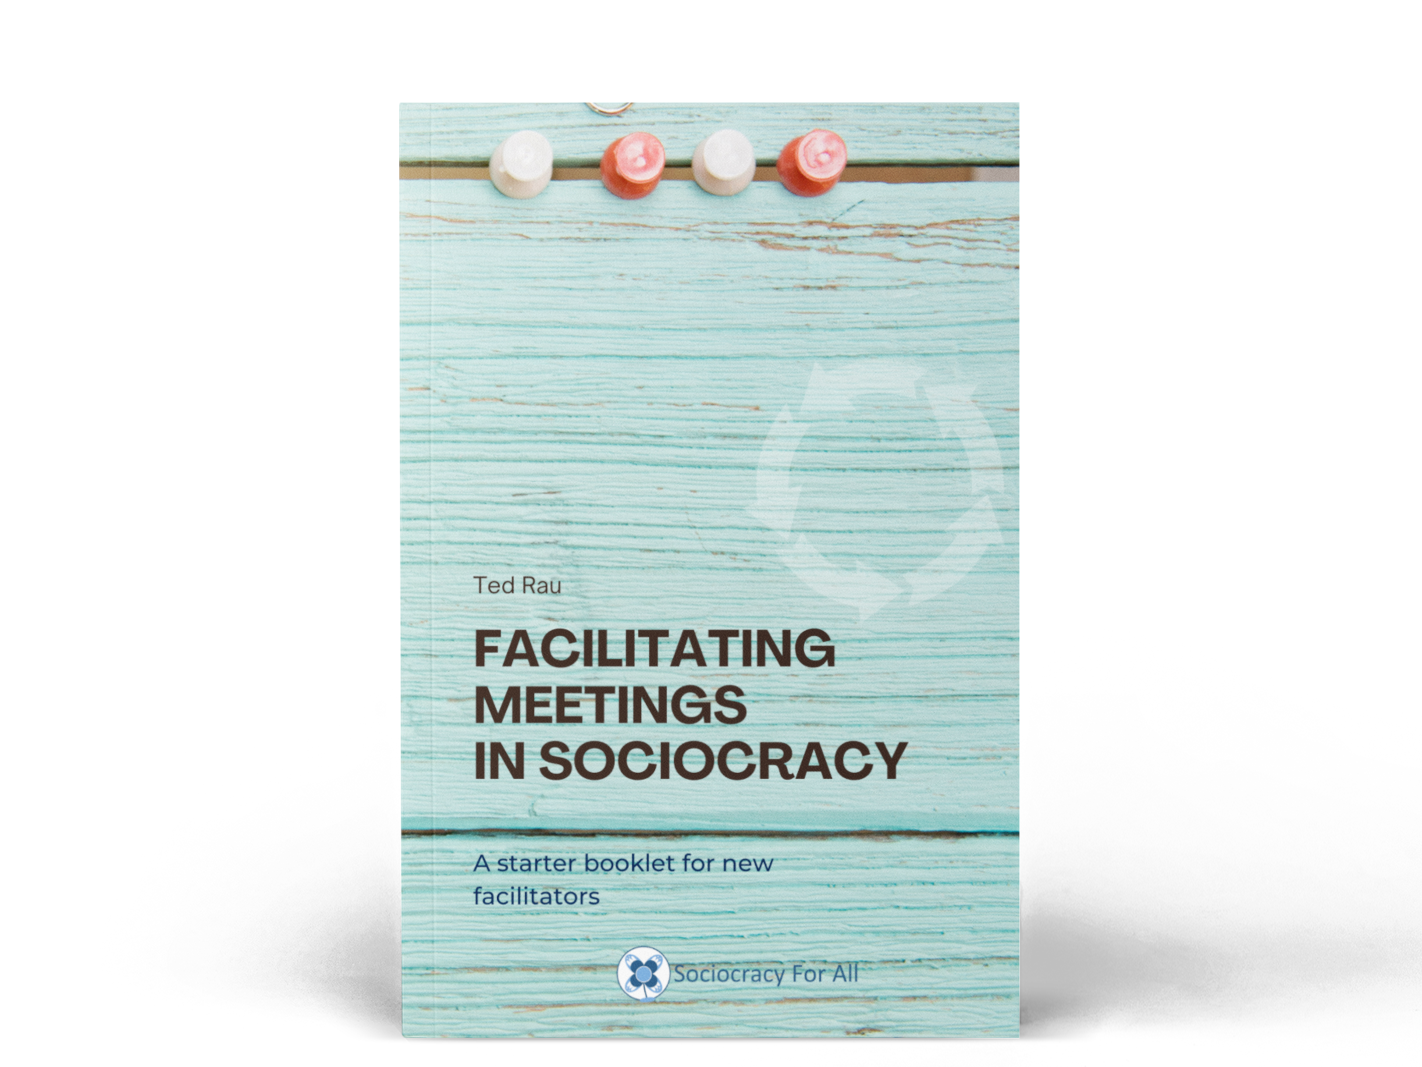 Facilitating Meetings in Sociocracy by Ted Rau